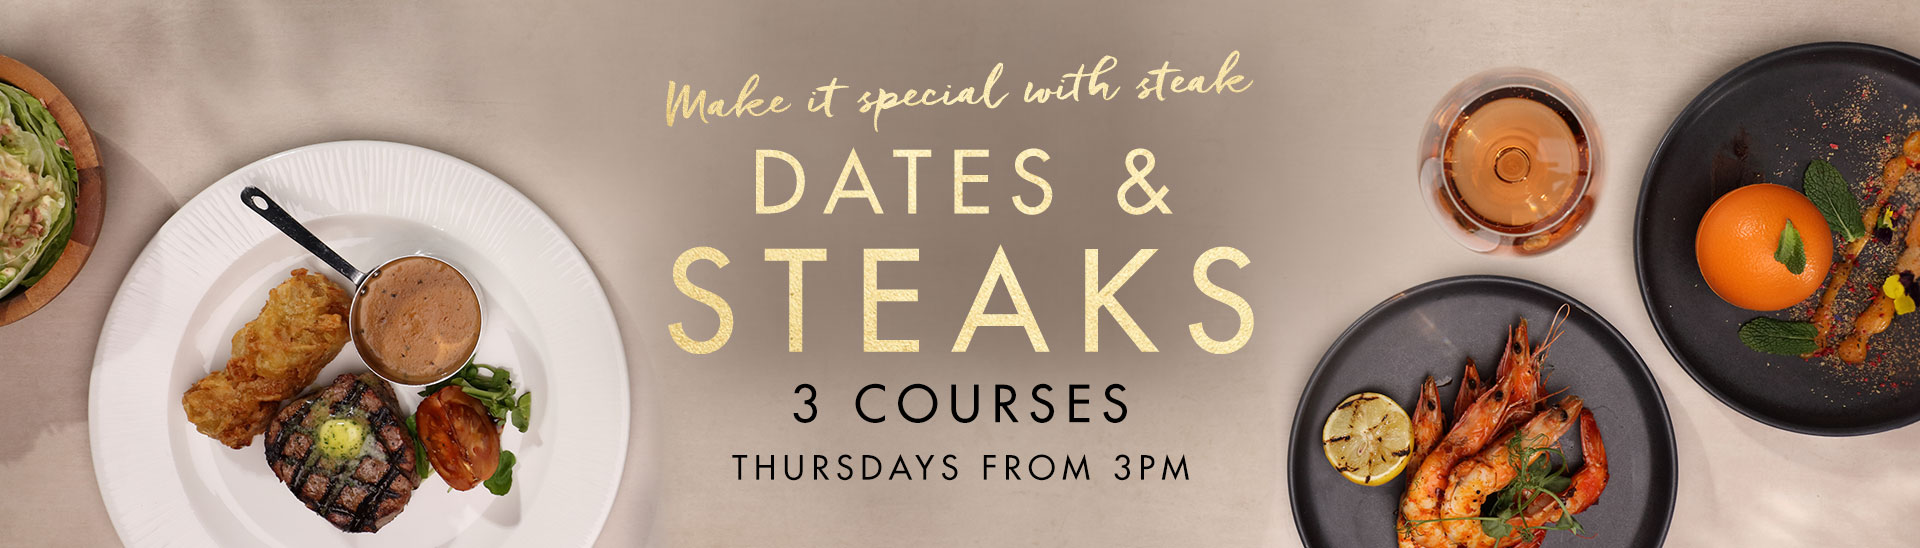 Dates & Steaks at Miller & Carter Hockley Heath